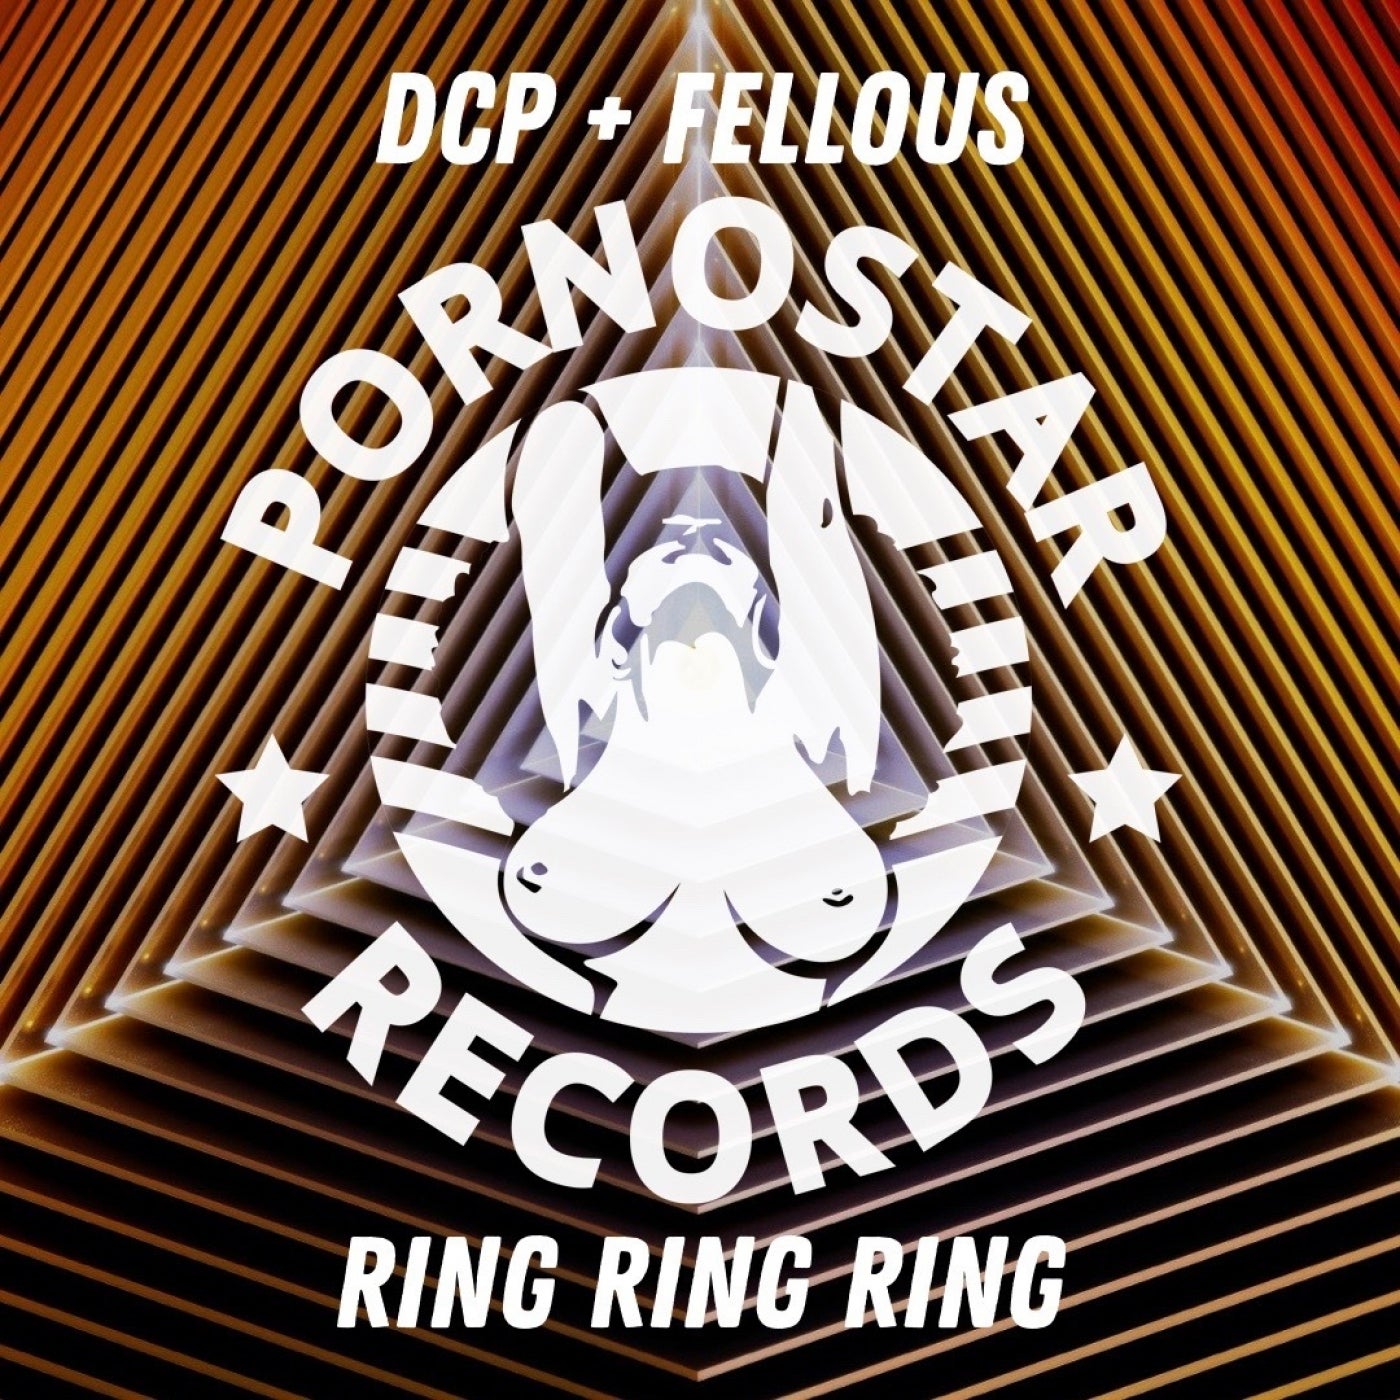 DCP & Fellous - Ring Ring Ring